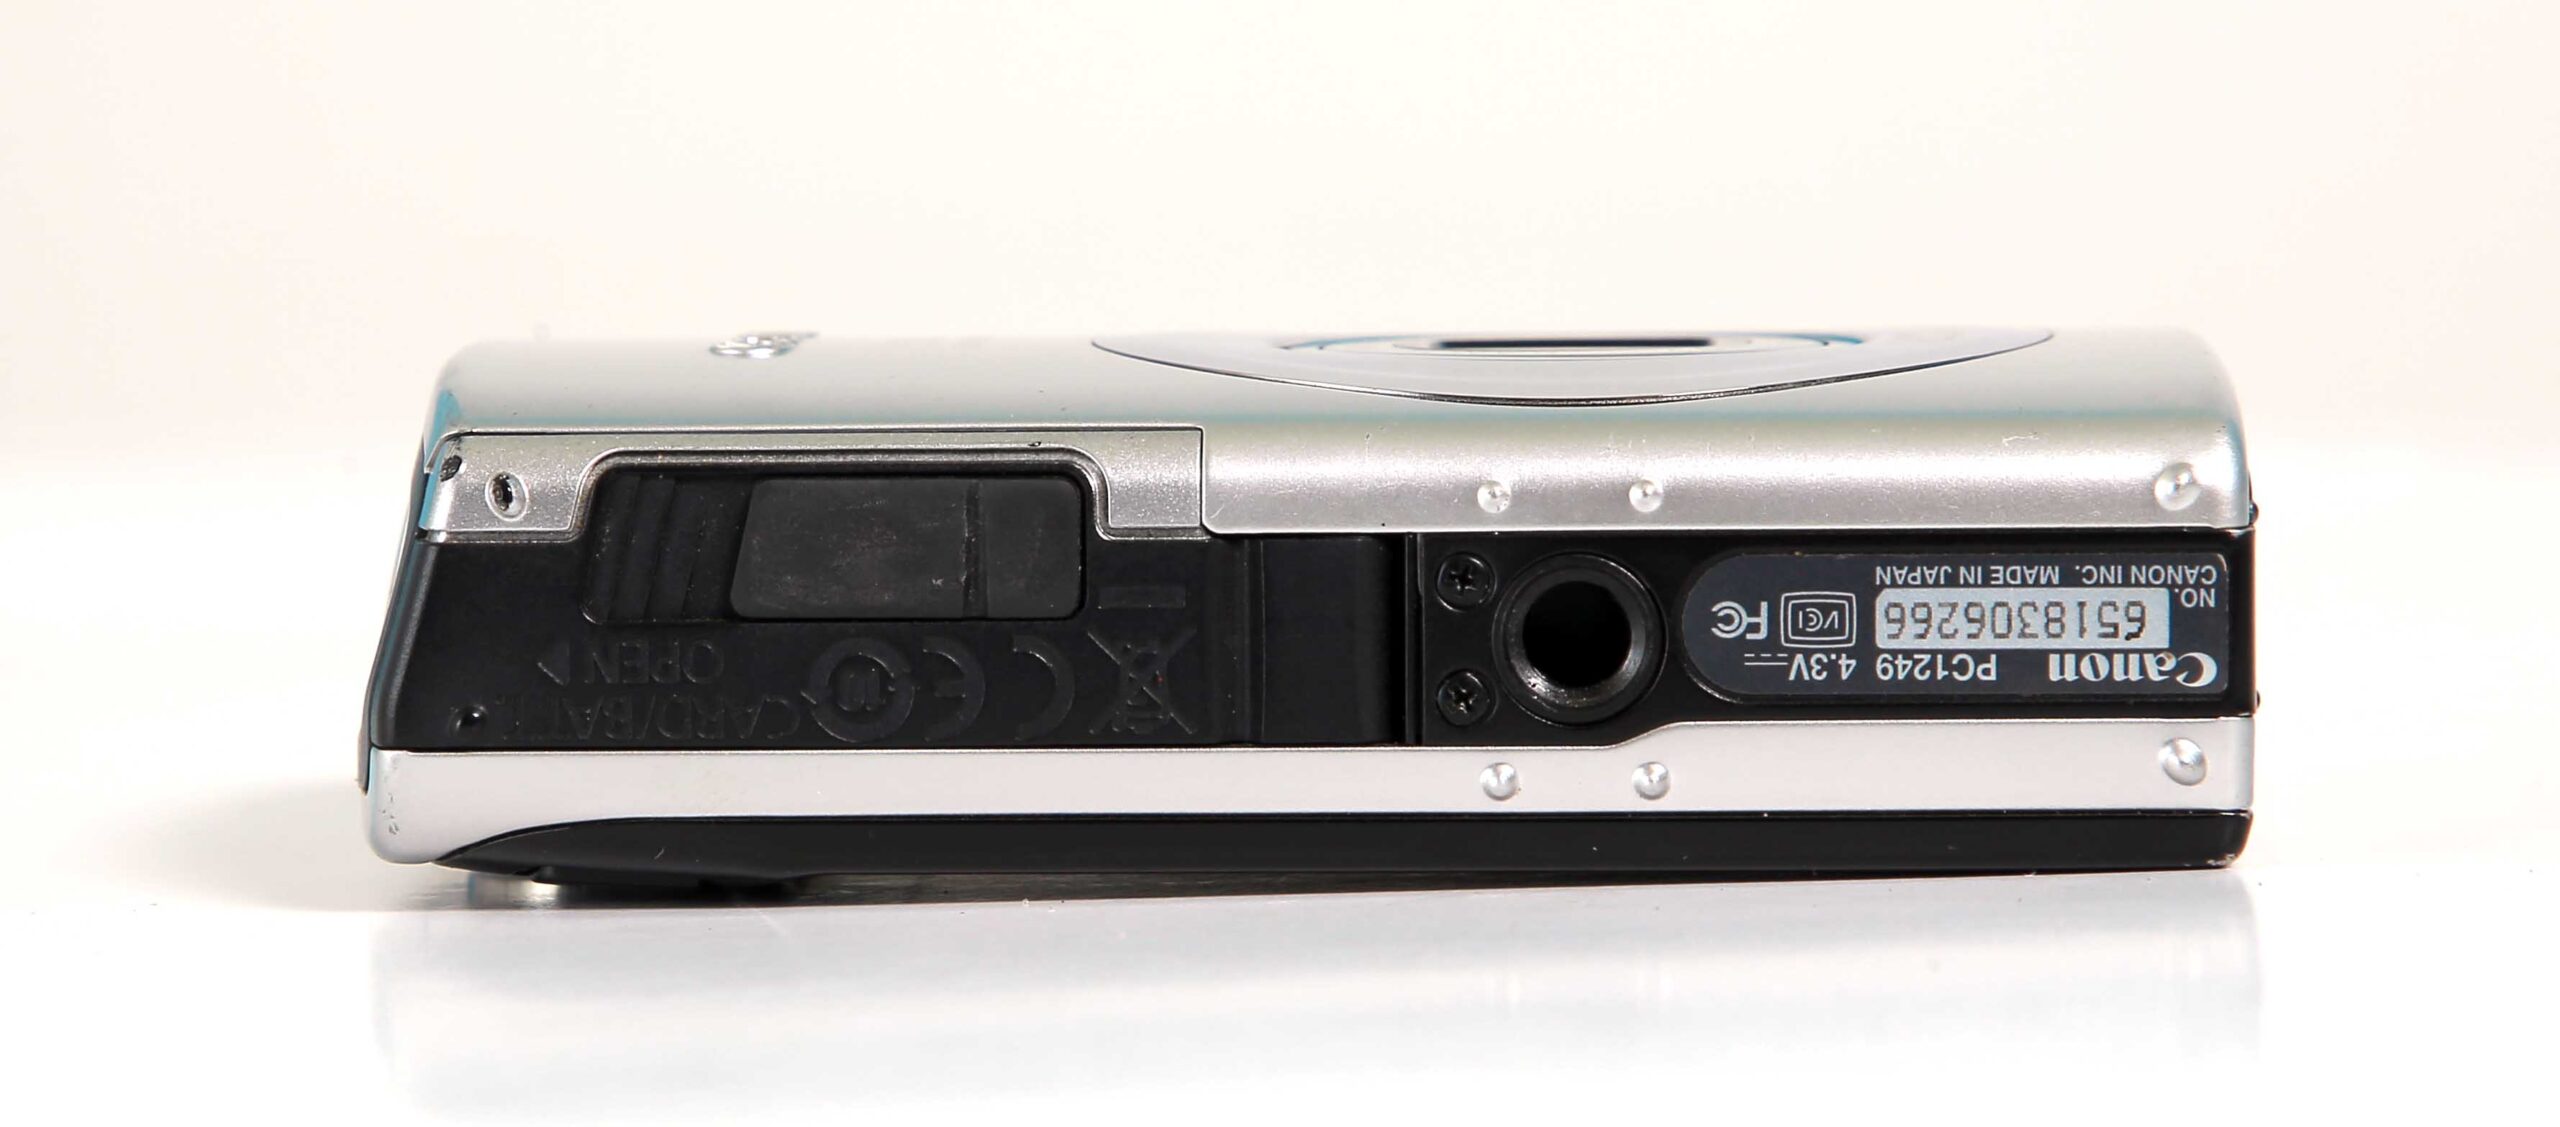 CANON IXY DIGITAL 910 IS SL - 新潟県で中古カメラ・中古レンズの高価 